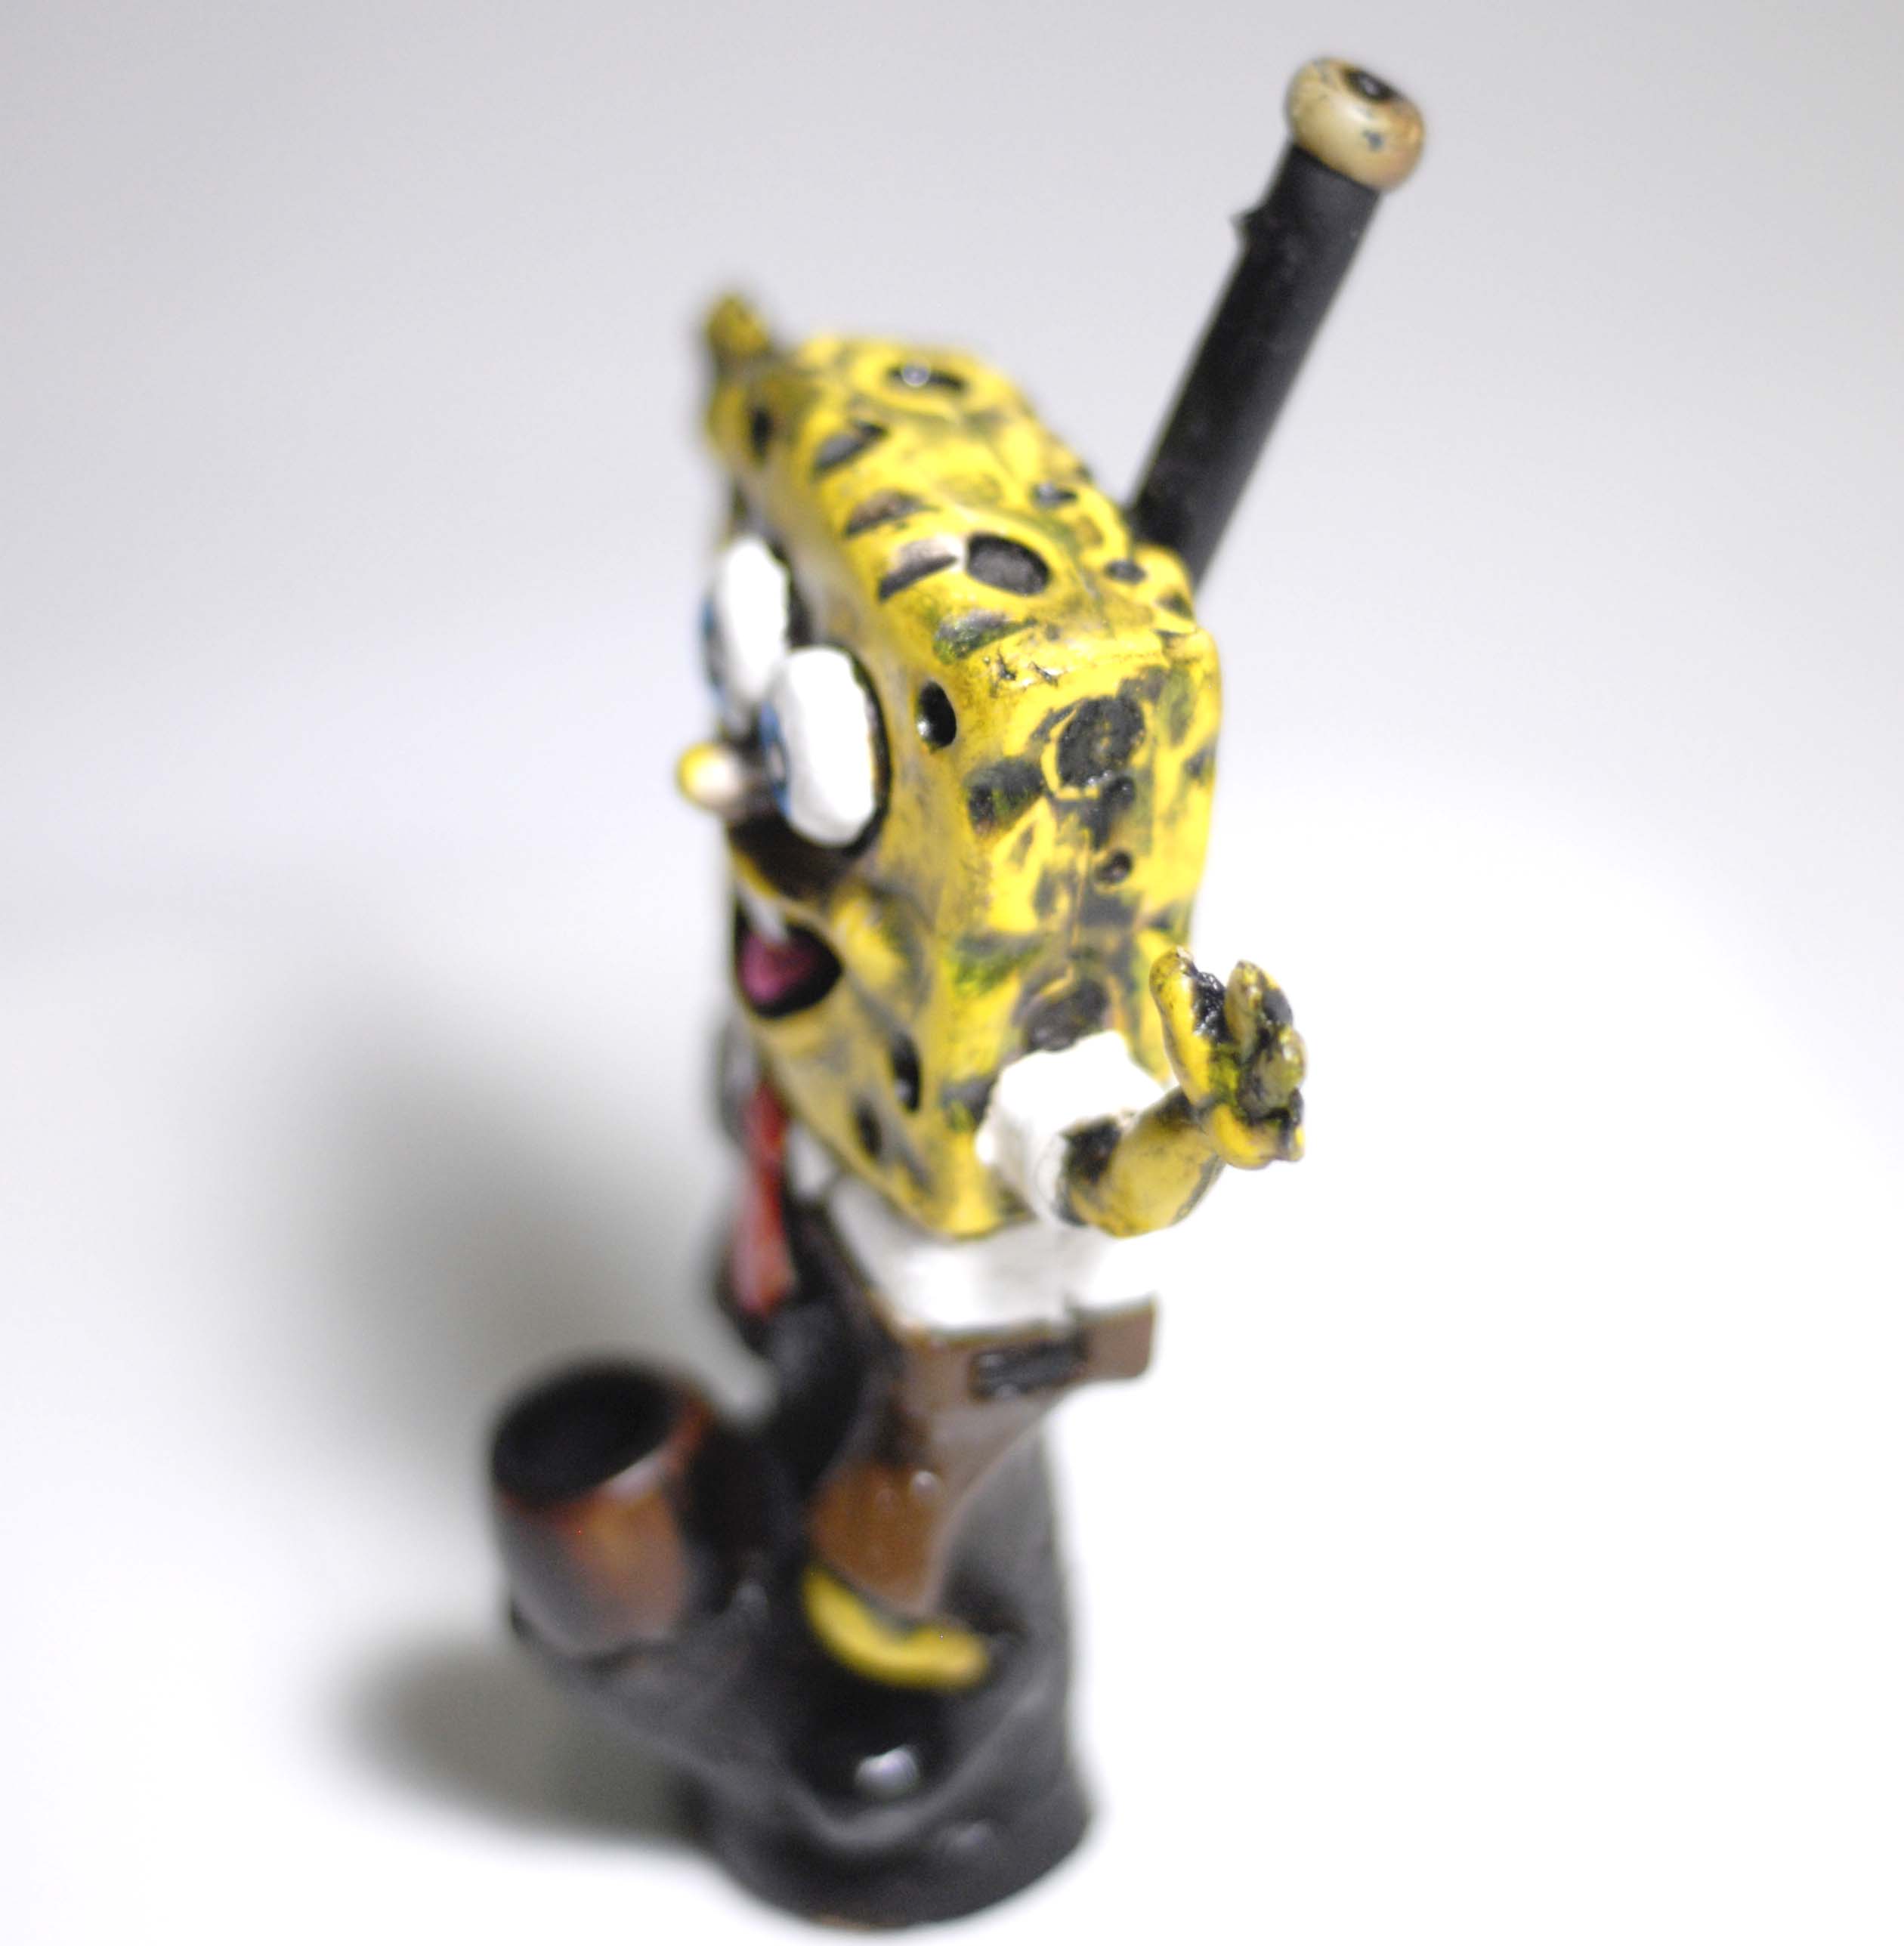 SpongeBob FIgured  Ceramic Tobacco Pipe.